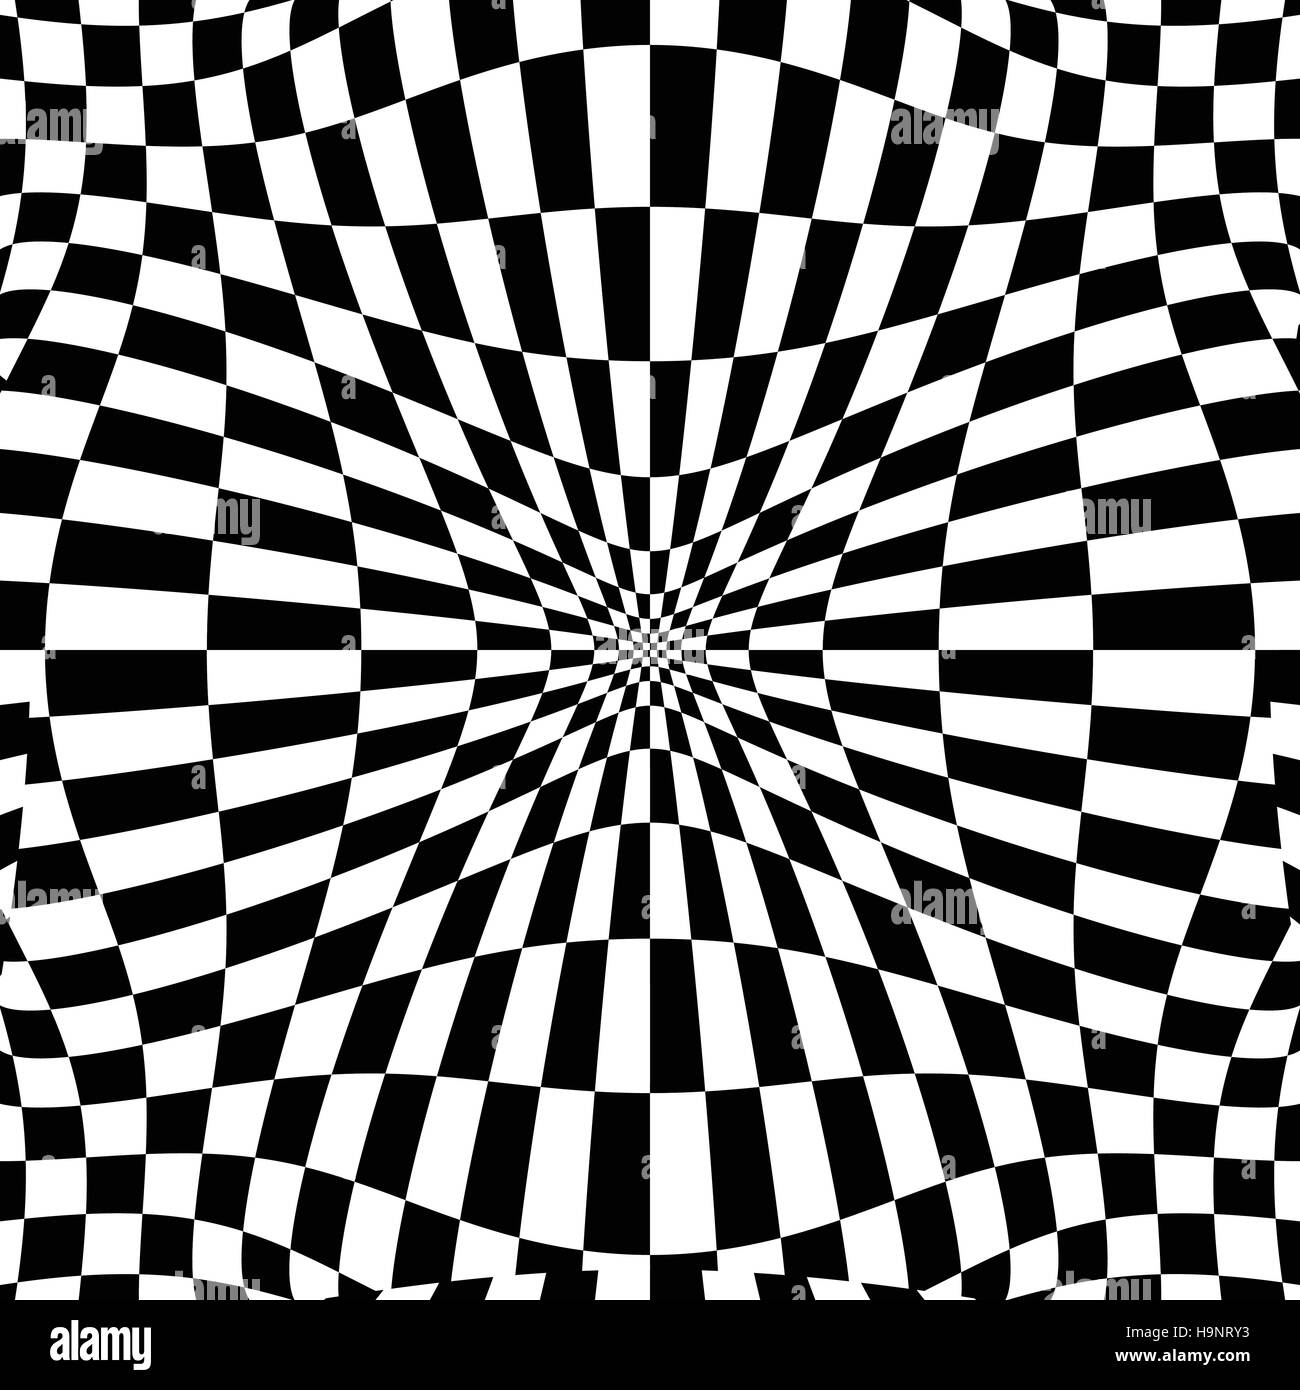 Checkered pattern with distortion effect. Deformed, irregular chessboard, checkerboard background. Stock Vector